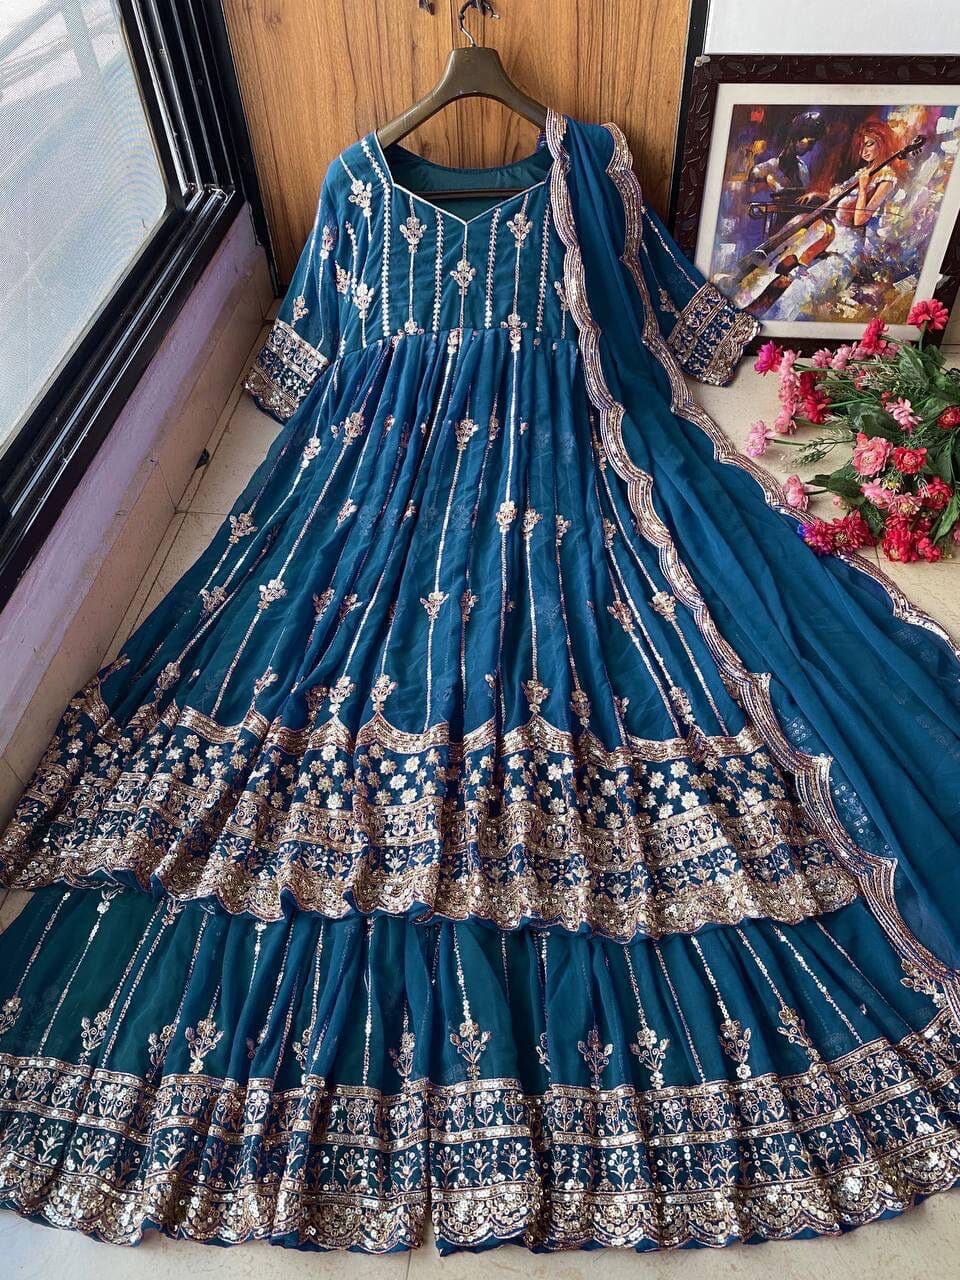 Yankita Kapoor Peacock Blue ReadyMade Lehenga suit Ready Made Designer Suits Shopin Di Apparels 